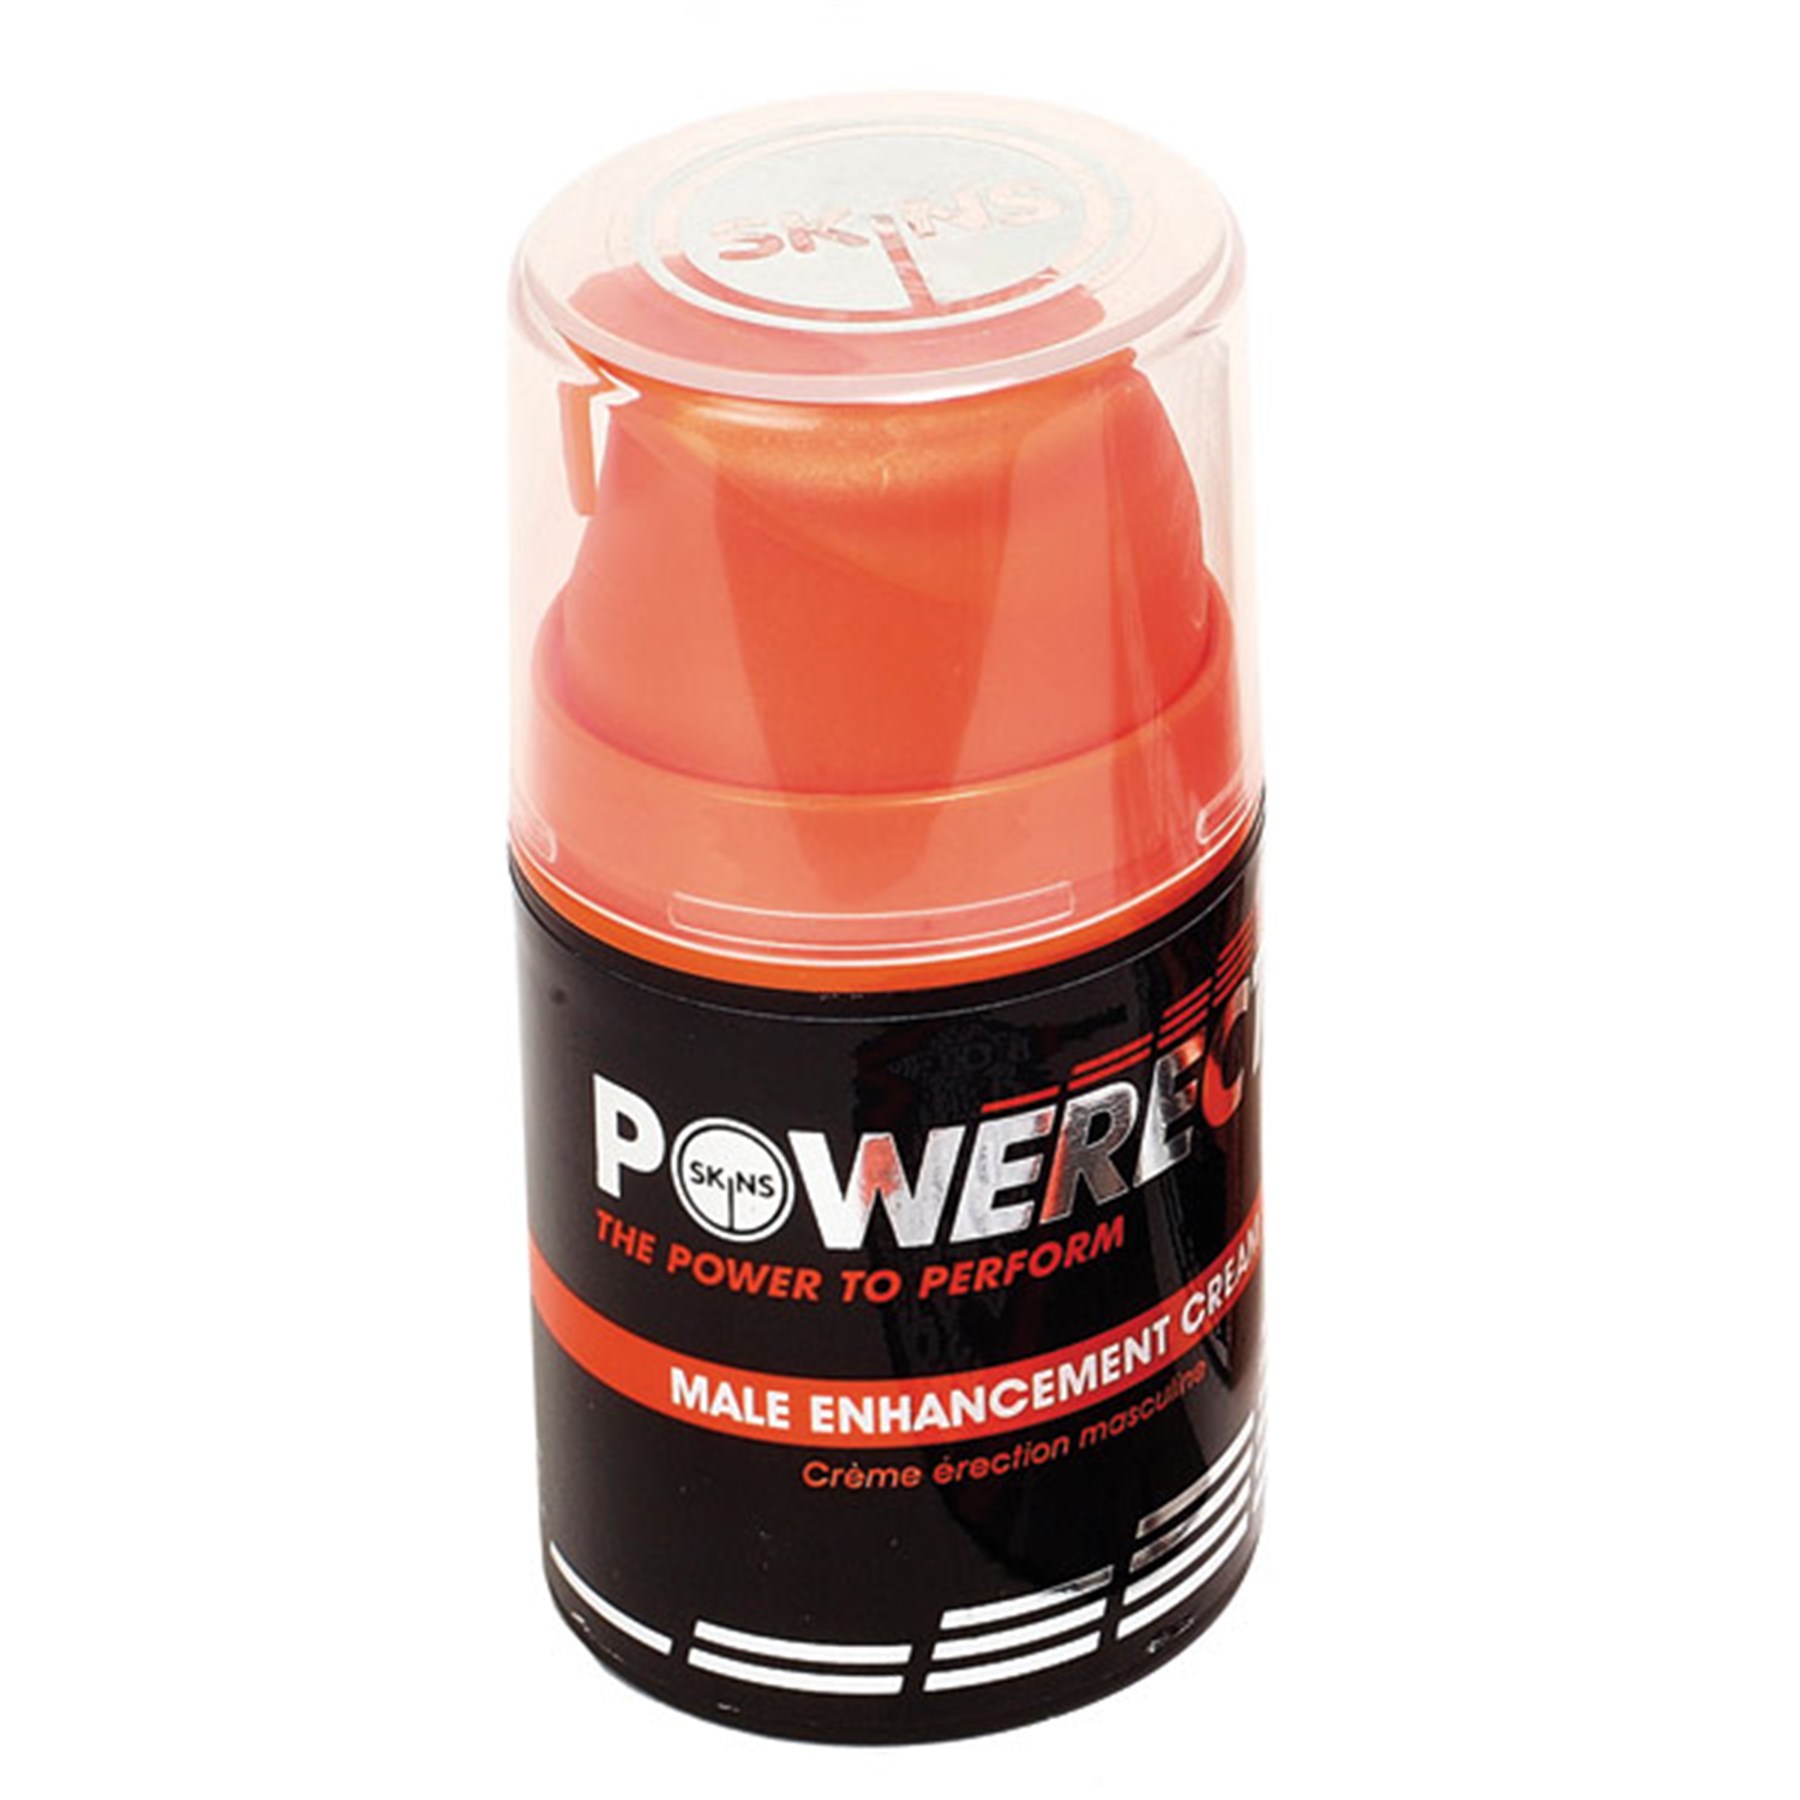 Powerect Male Enhancement Cream 1.6